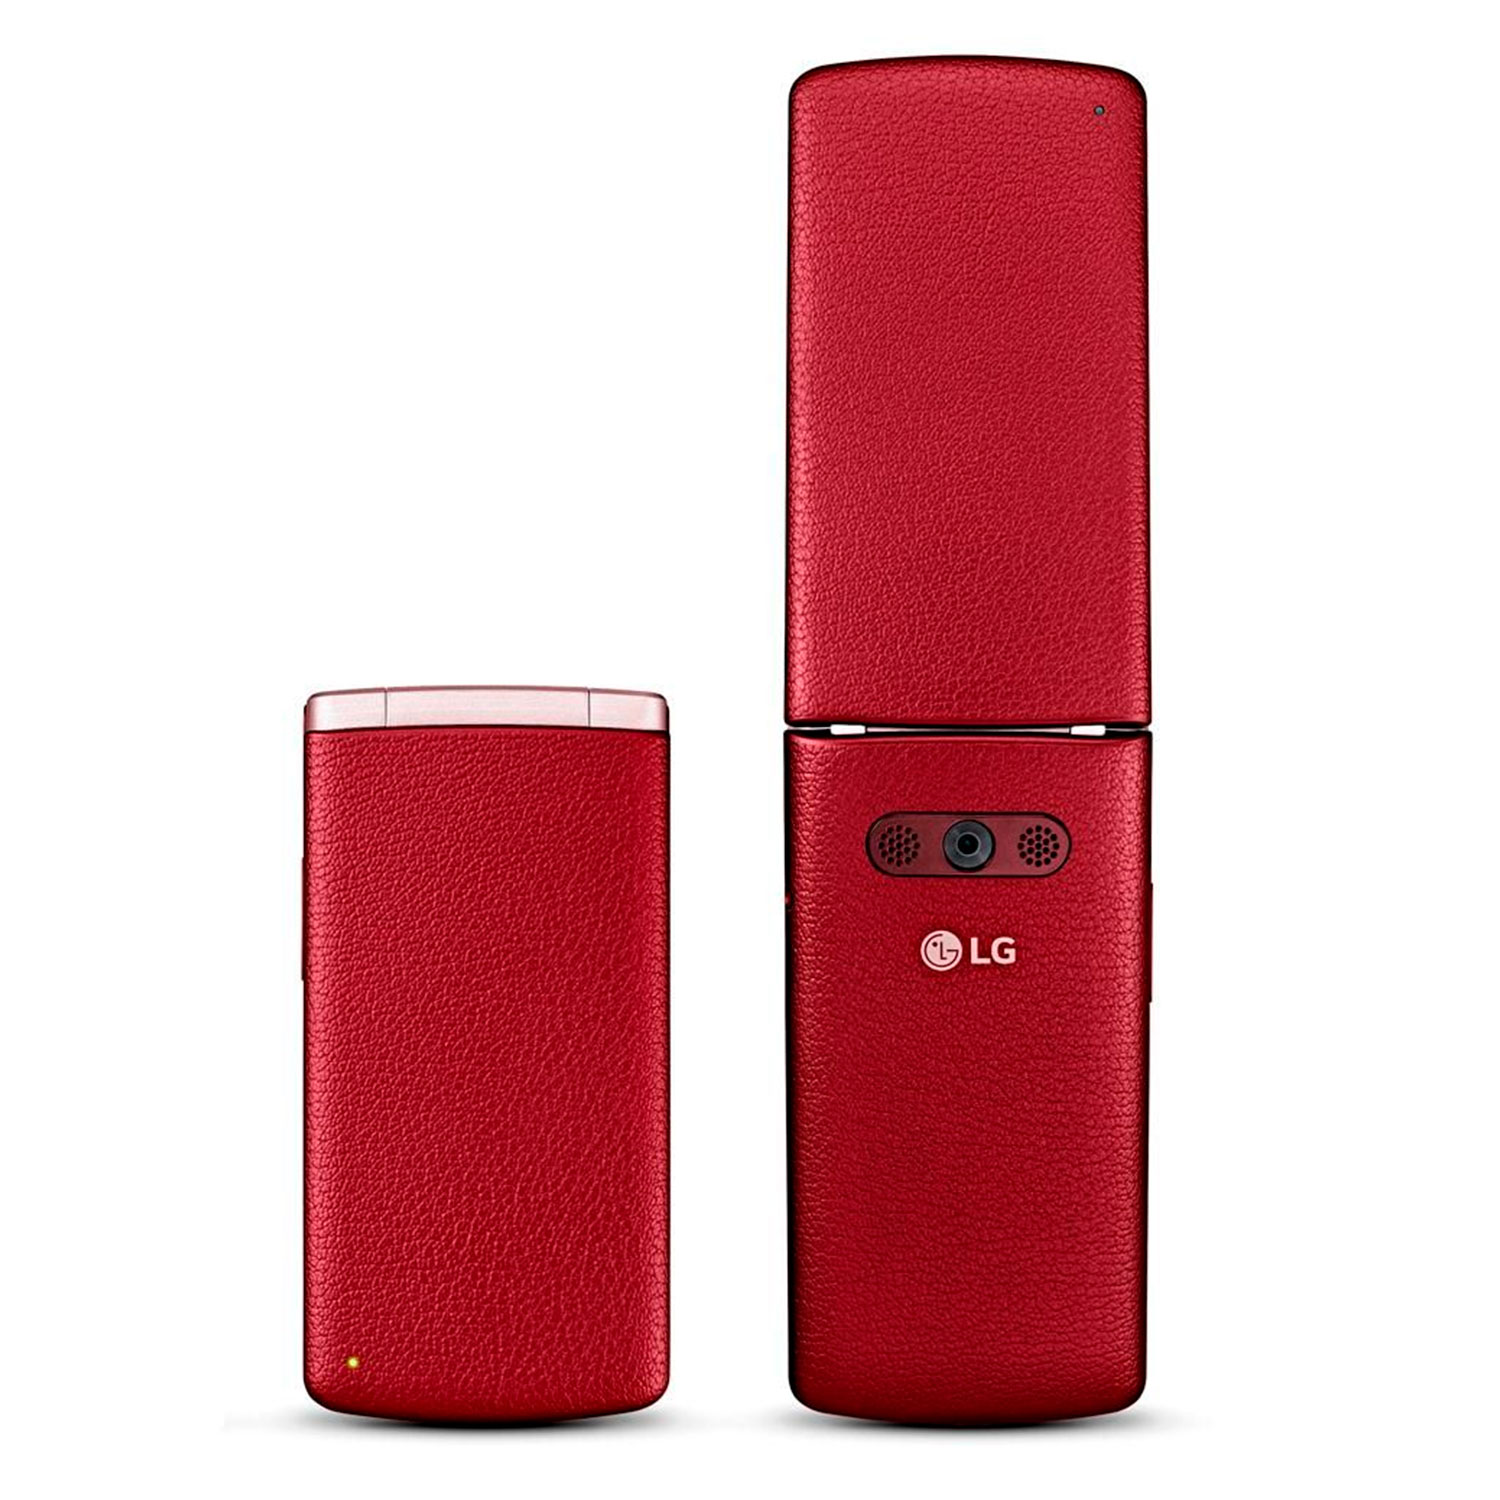 Celular LG G360 Dual SIM Tela 3" - Vermelho

